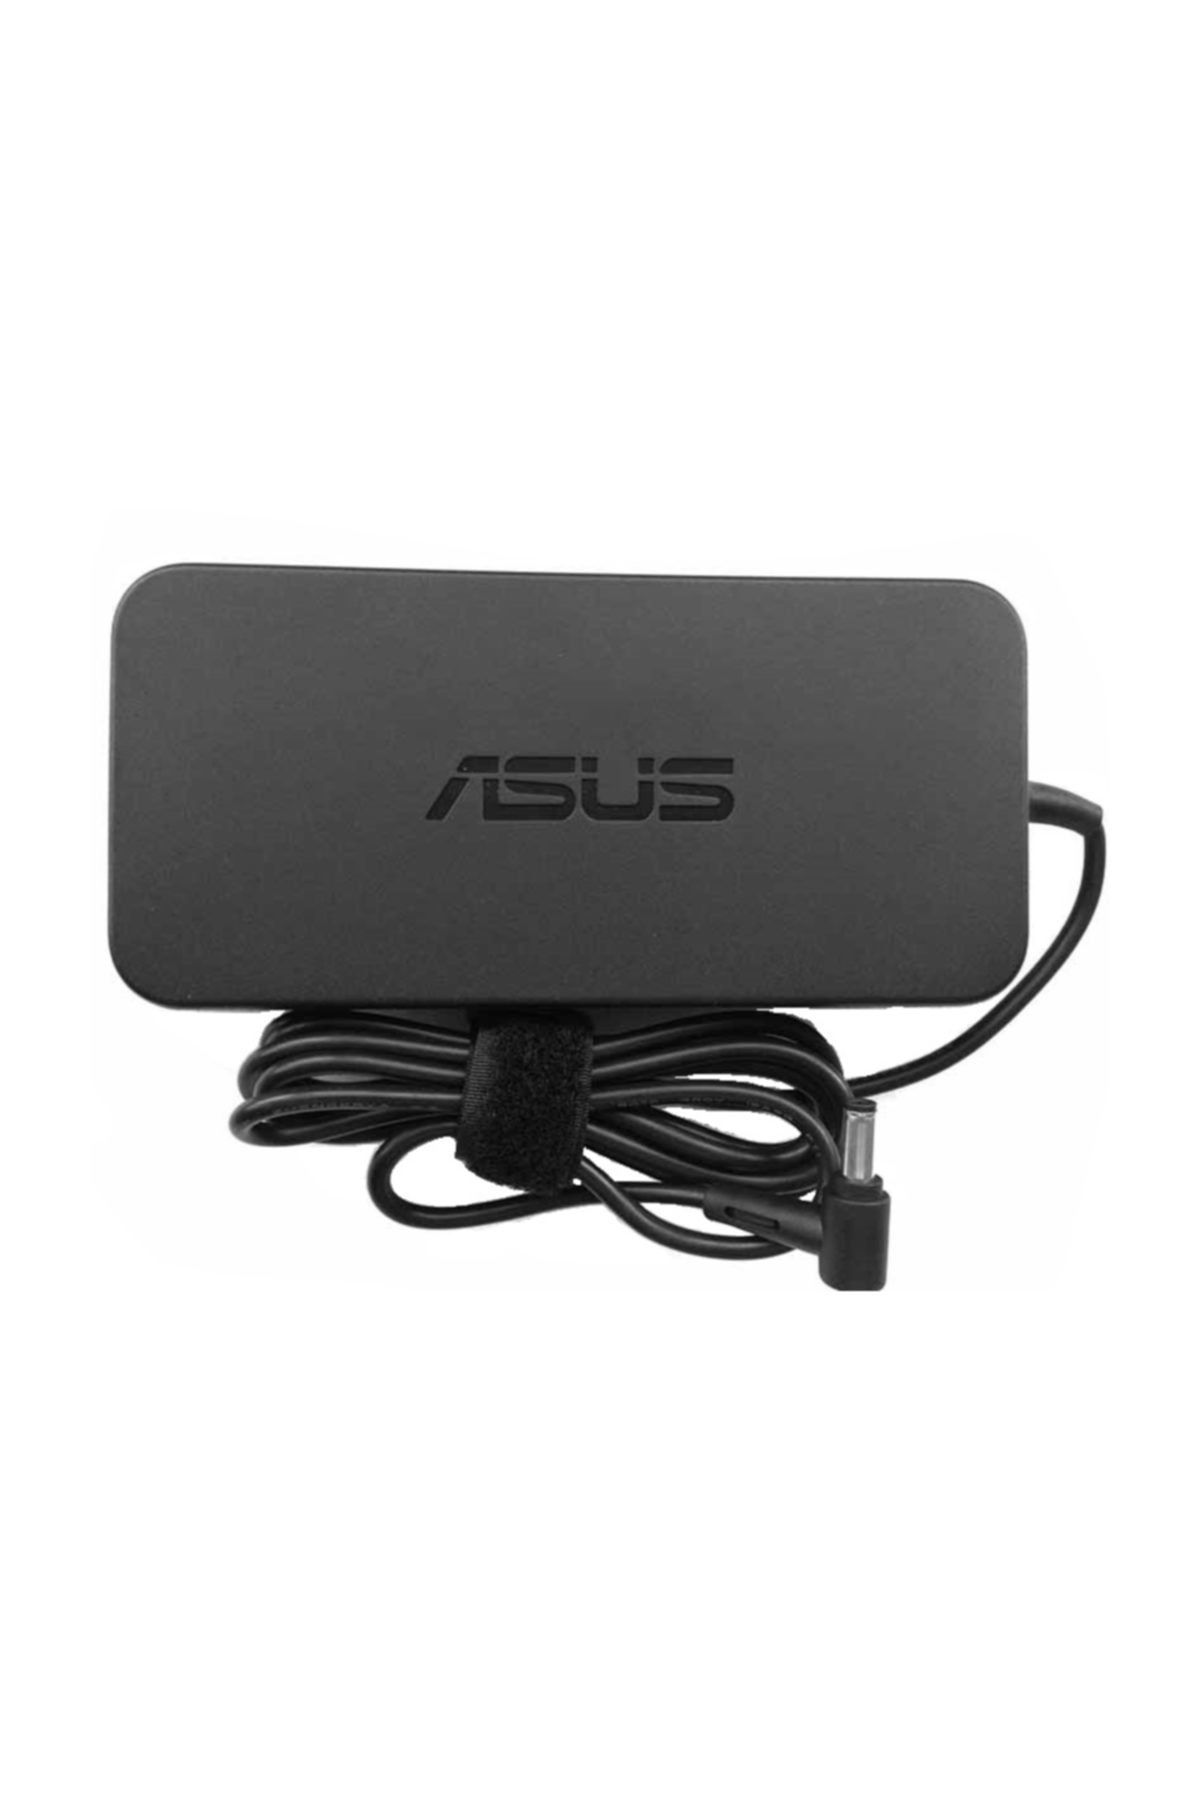 ASUS Vivobook Pro N552vx-fı185t Orijinal Notebook Adaptörü